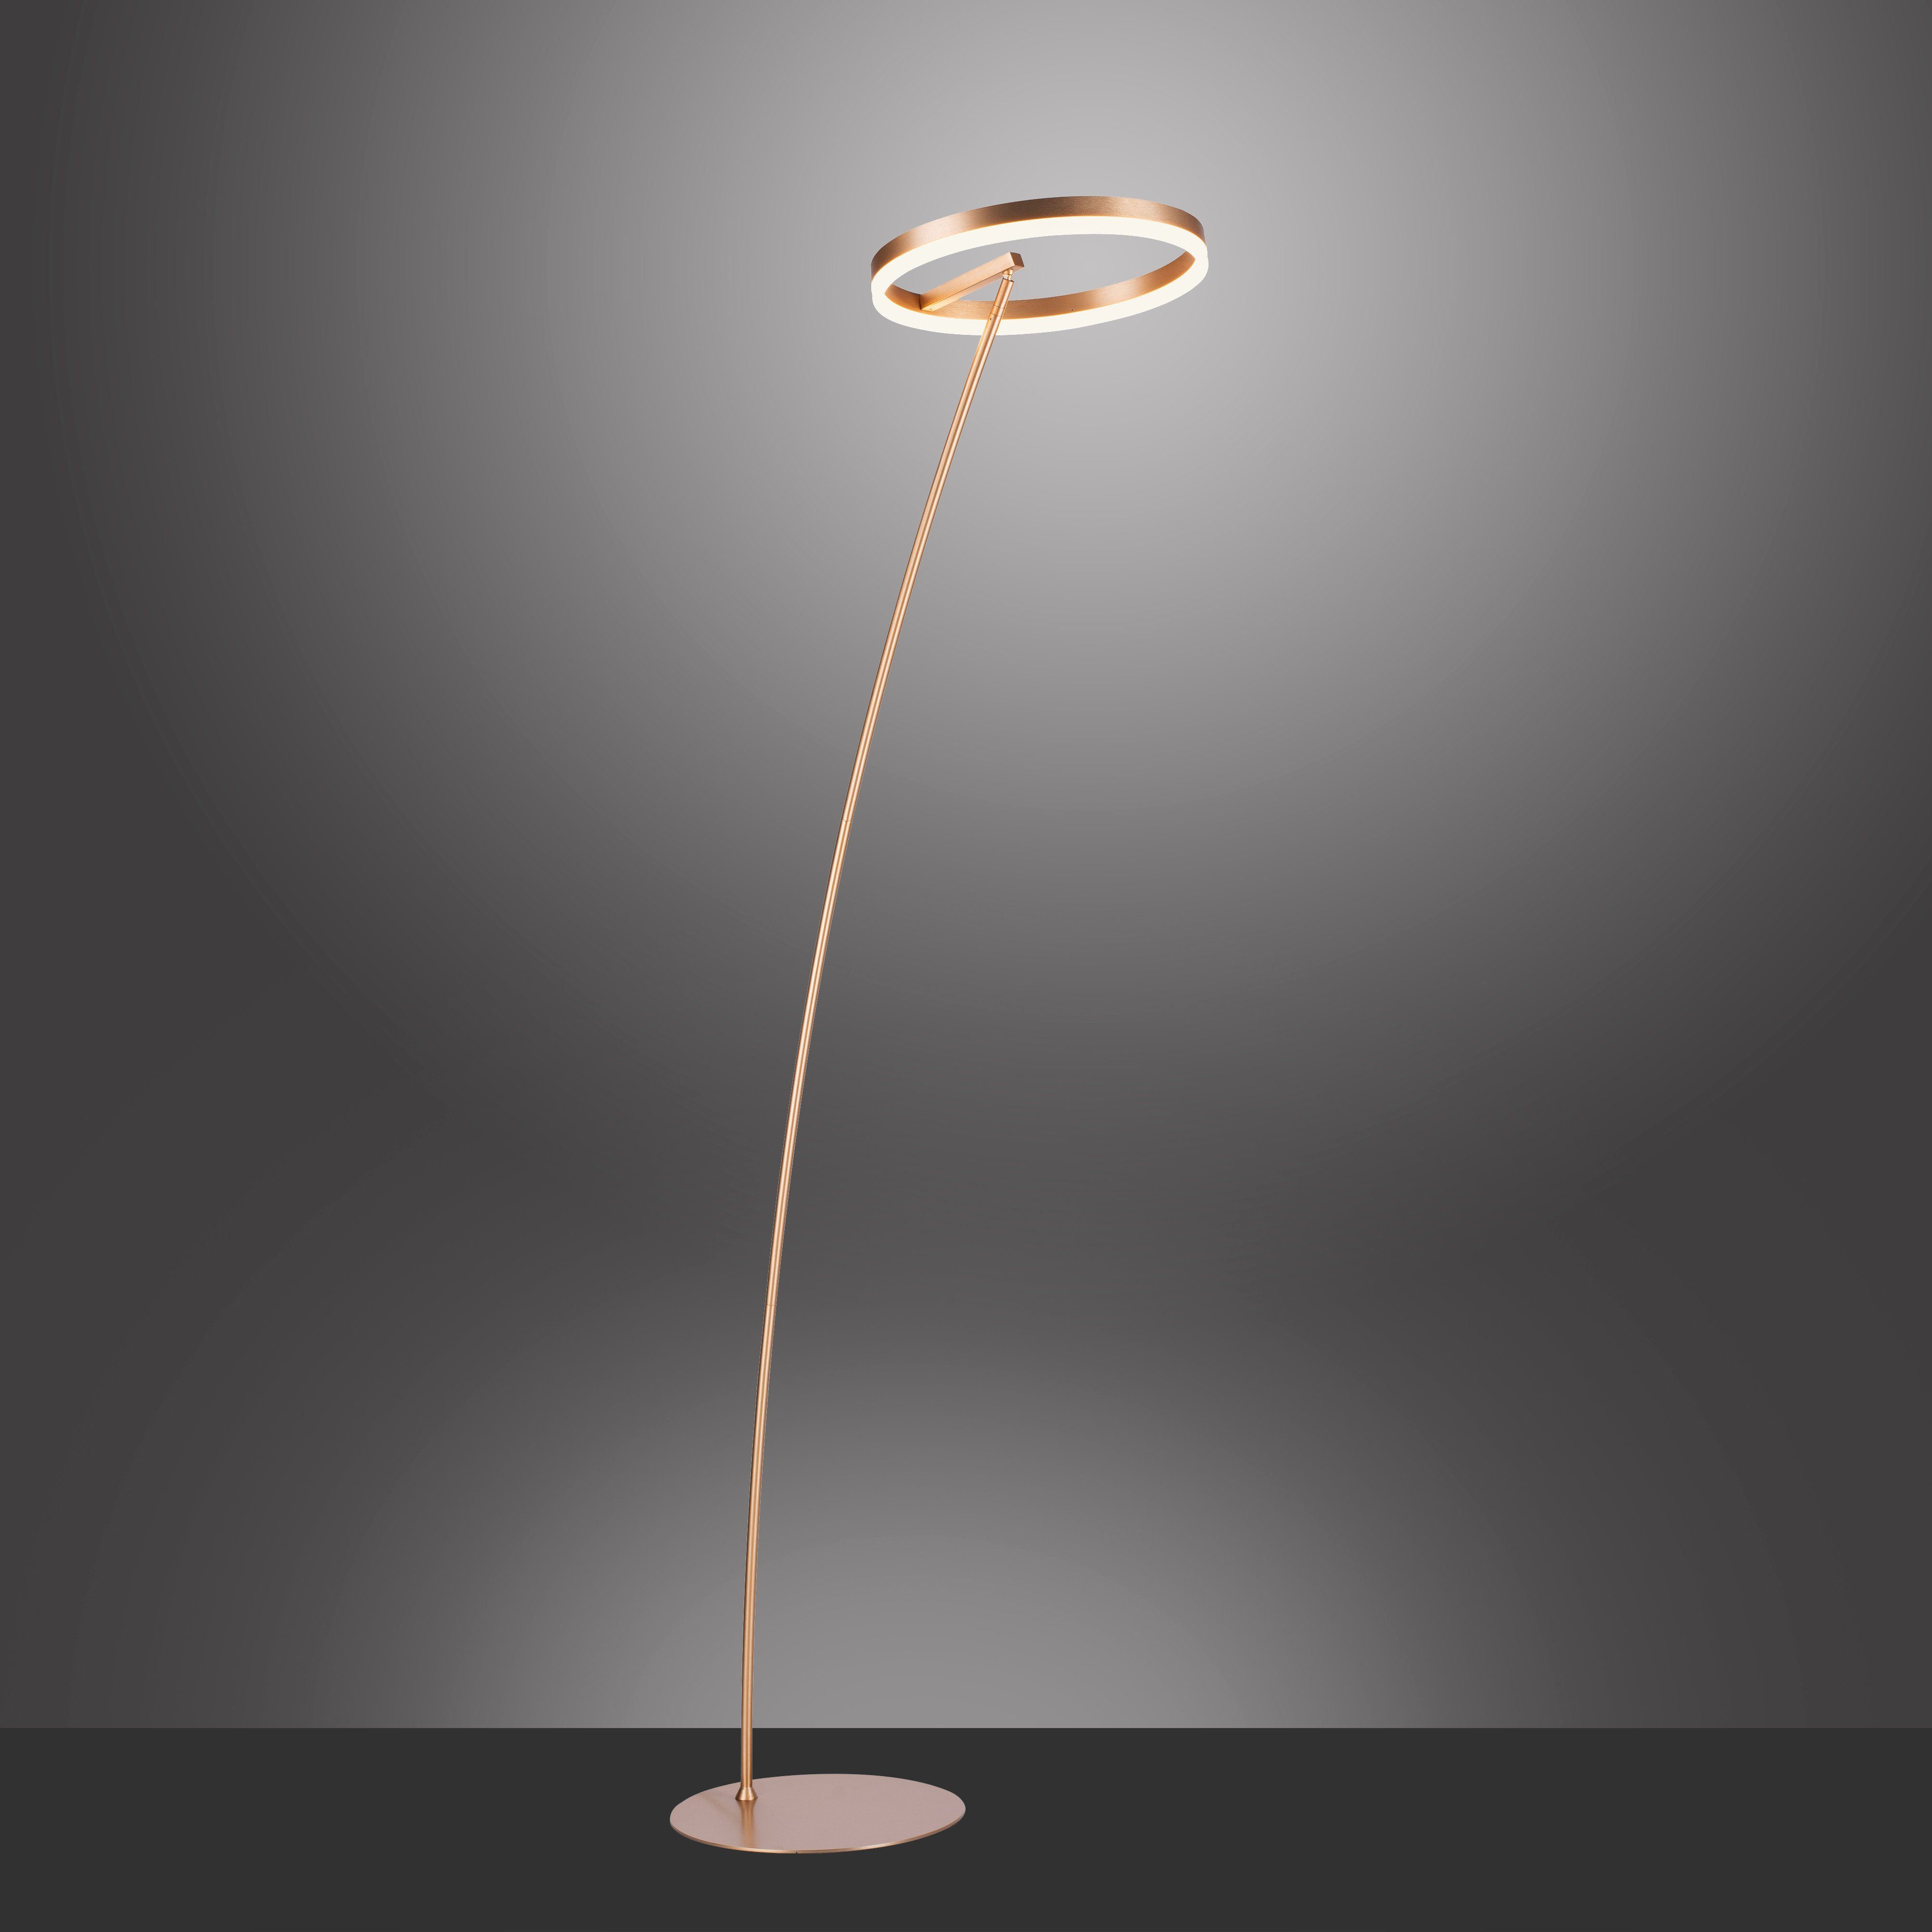 Paul Neuhaus Stehlampe TITUS, LED integriert, dimmbar fest LED, Warmweiß, über Schnurdimmer